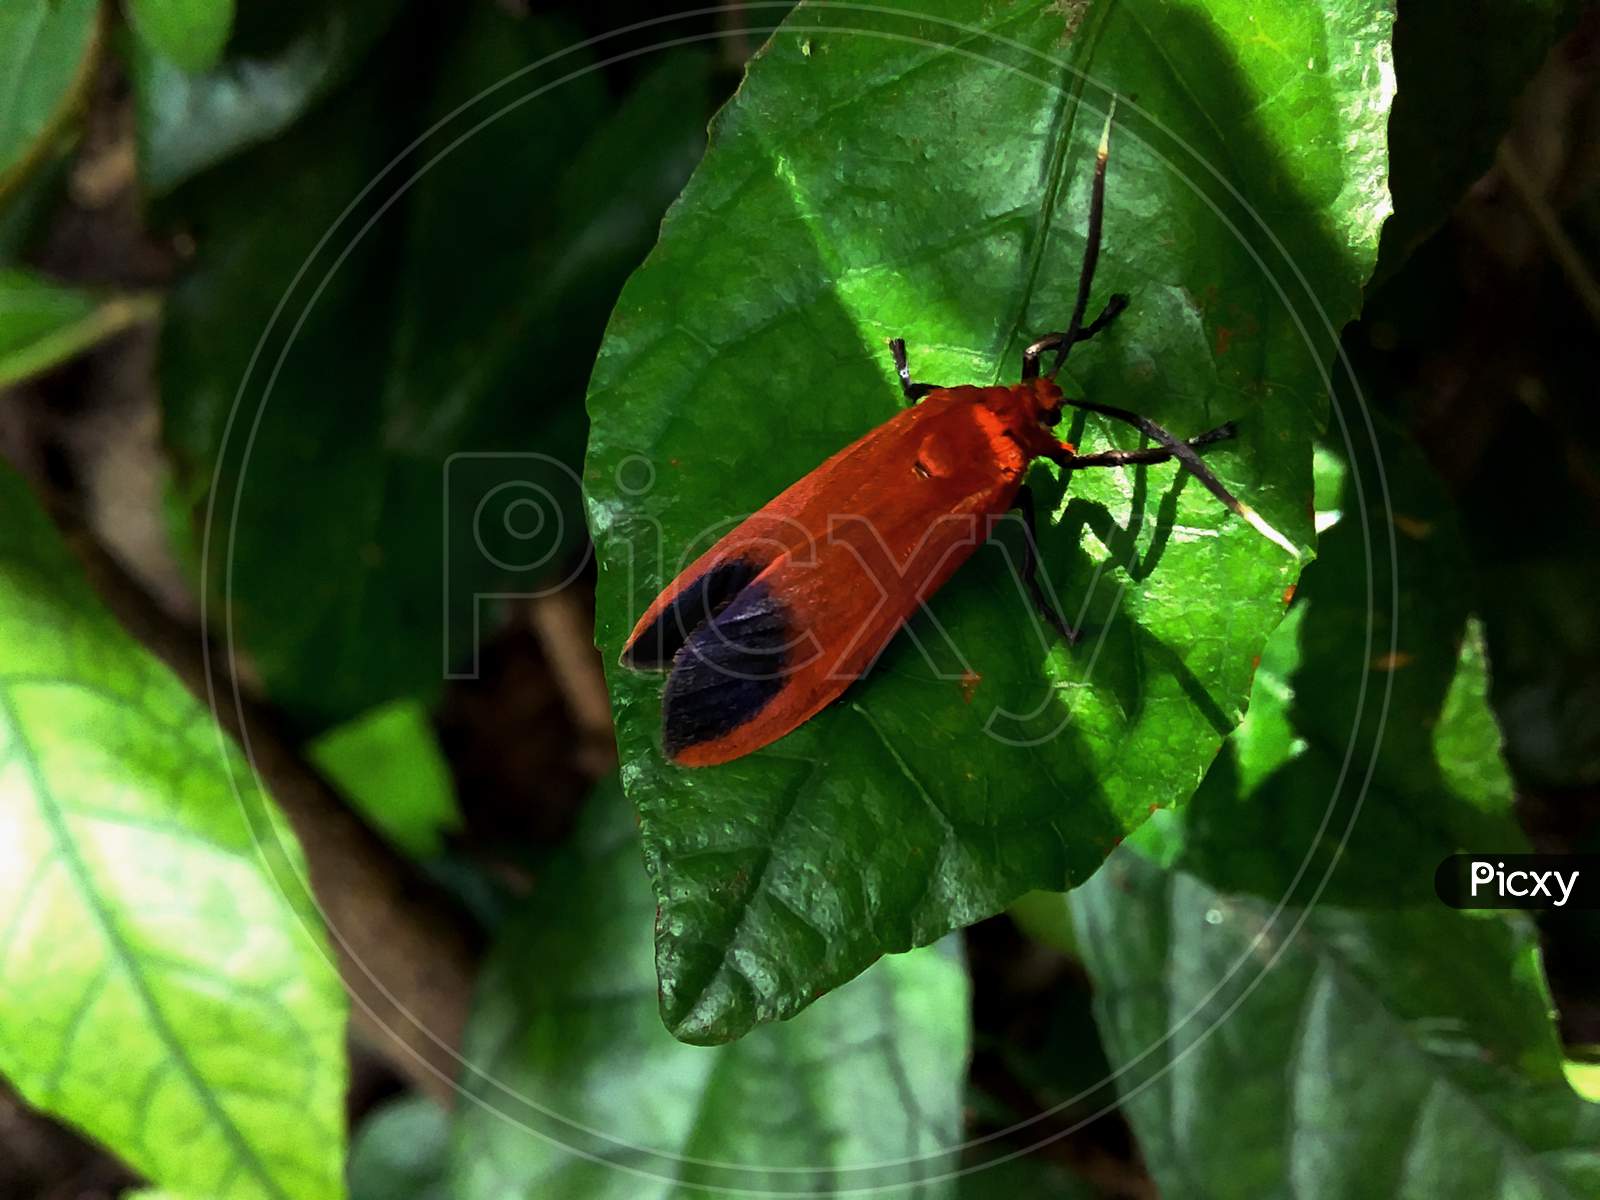 red bug on green leaf